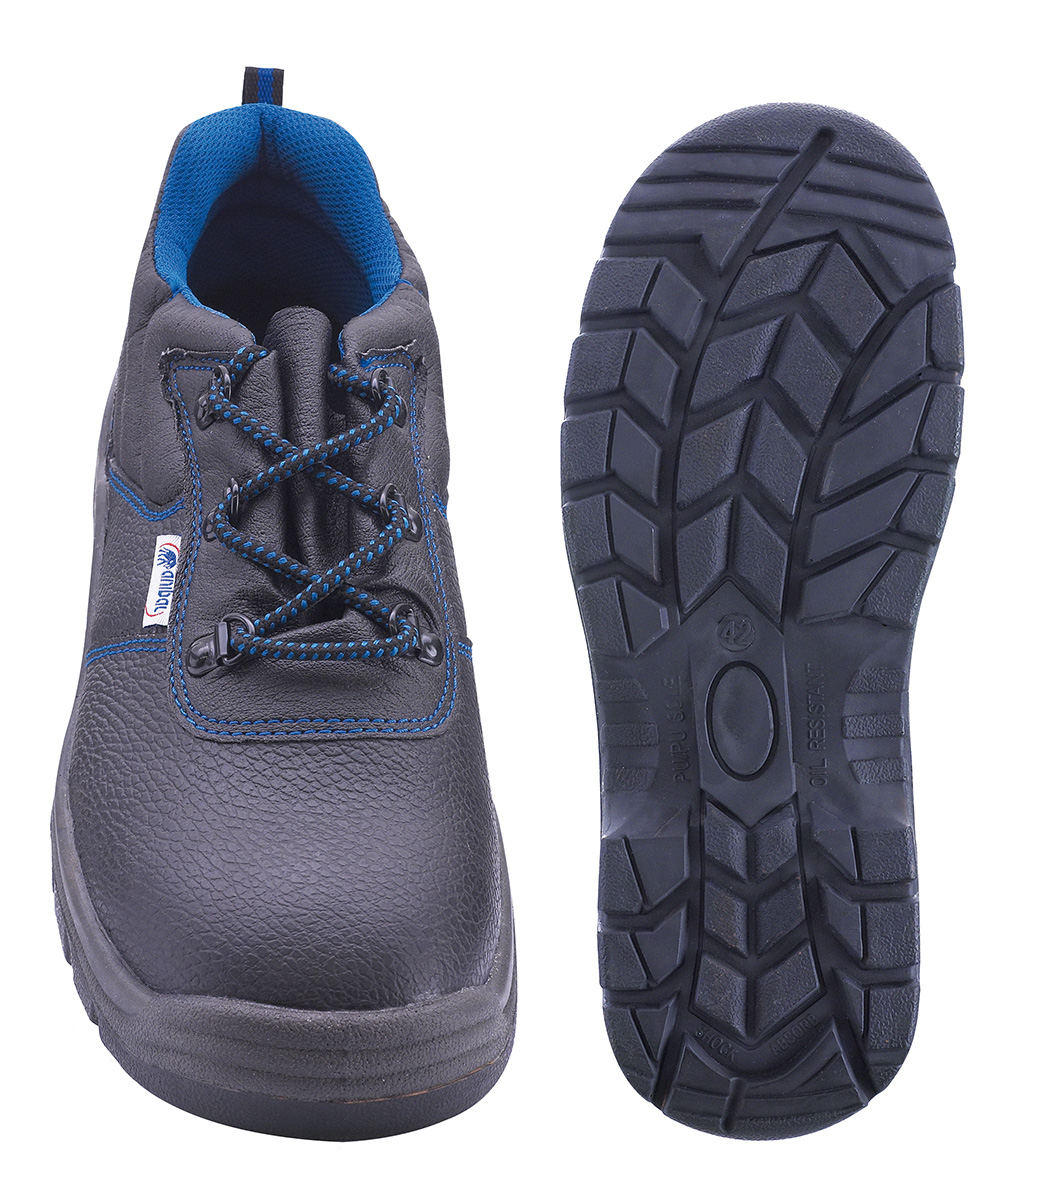 1688-B Safety Footwear Basic Line Mod. 'MASTIA'. Black microfiber leather boot S1P with double density polyurethane sole.